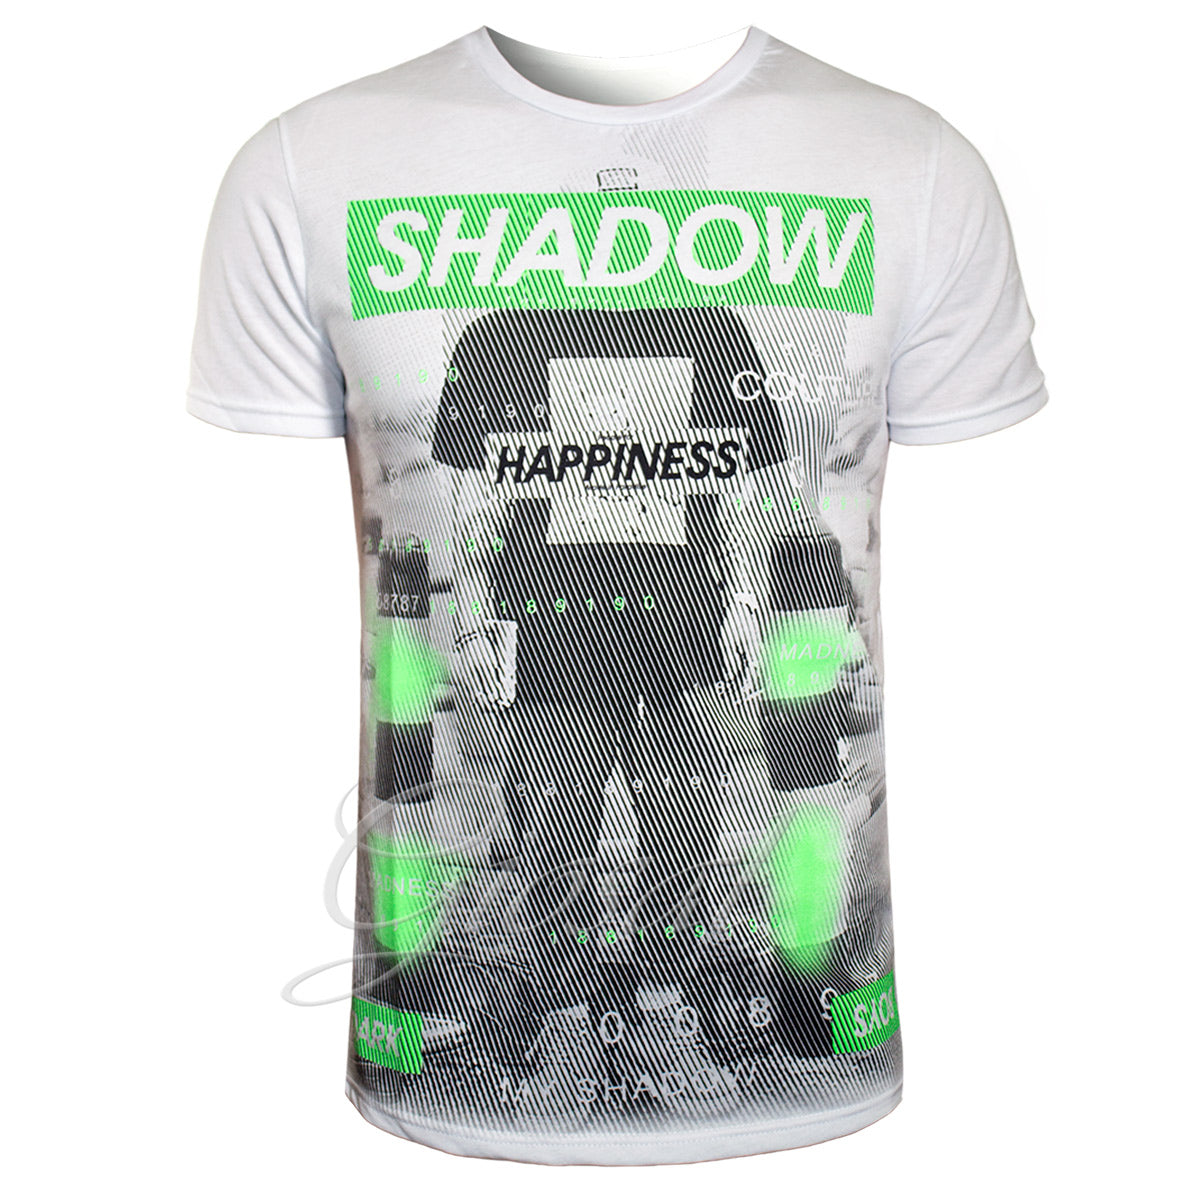 T-Shirt Uomo Happiness Due Colori Stampa Scritta Girocollo Casual GIOSAL